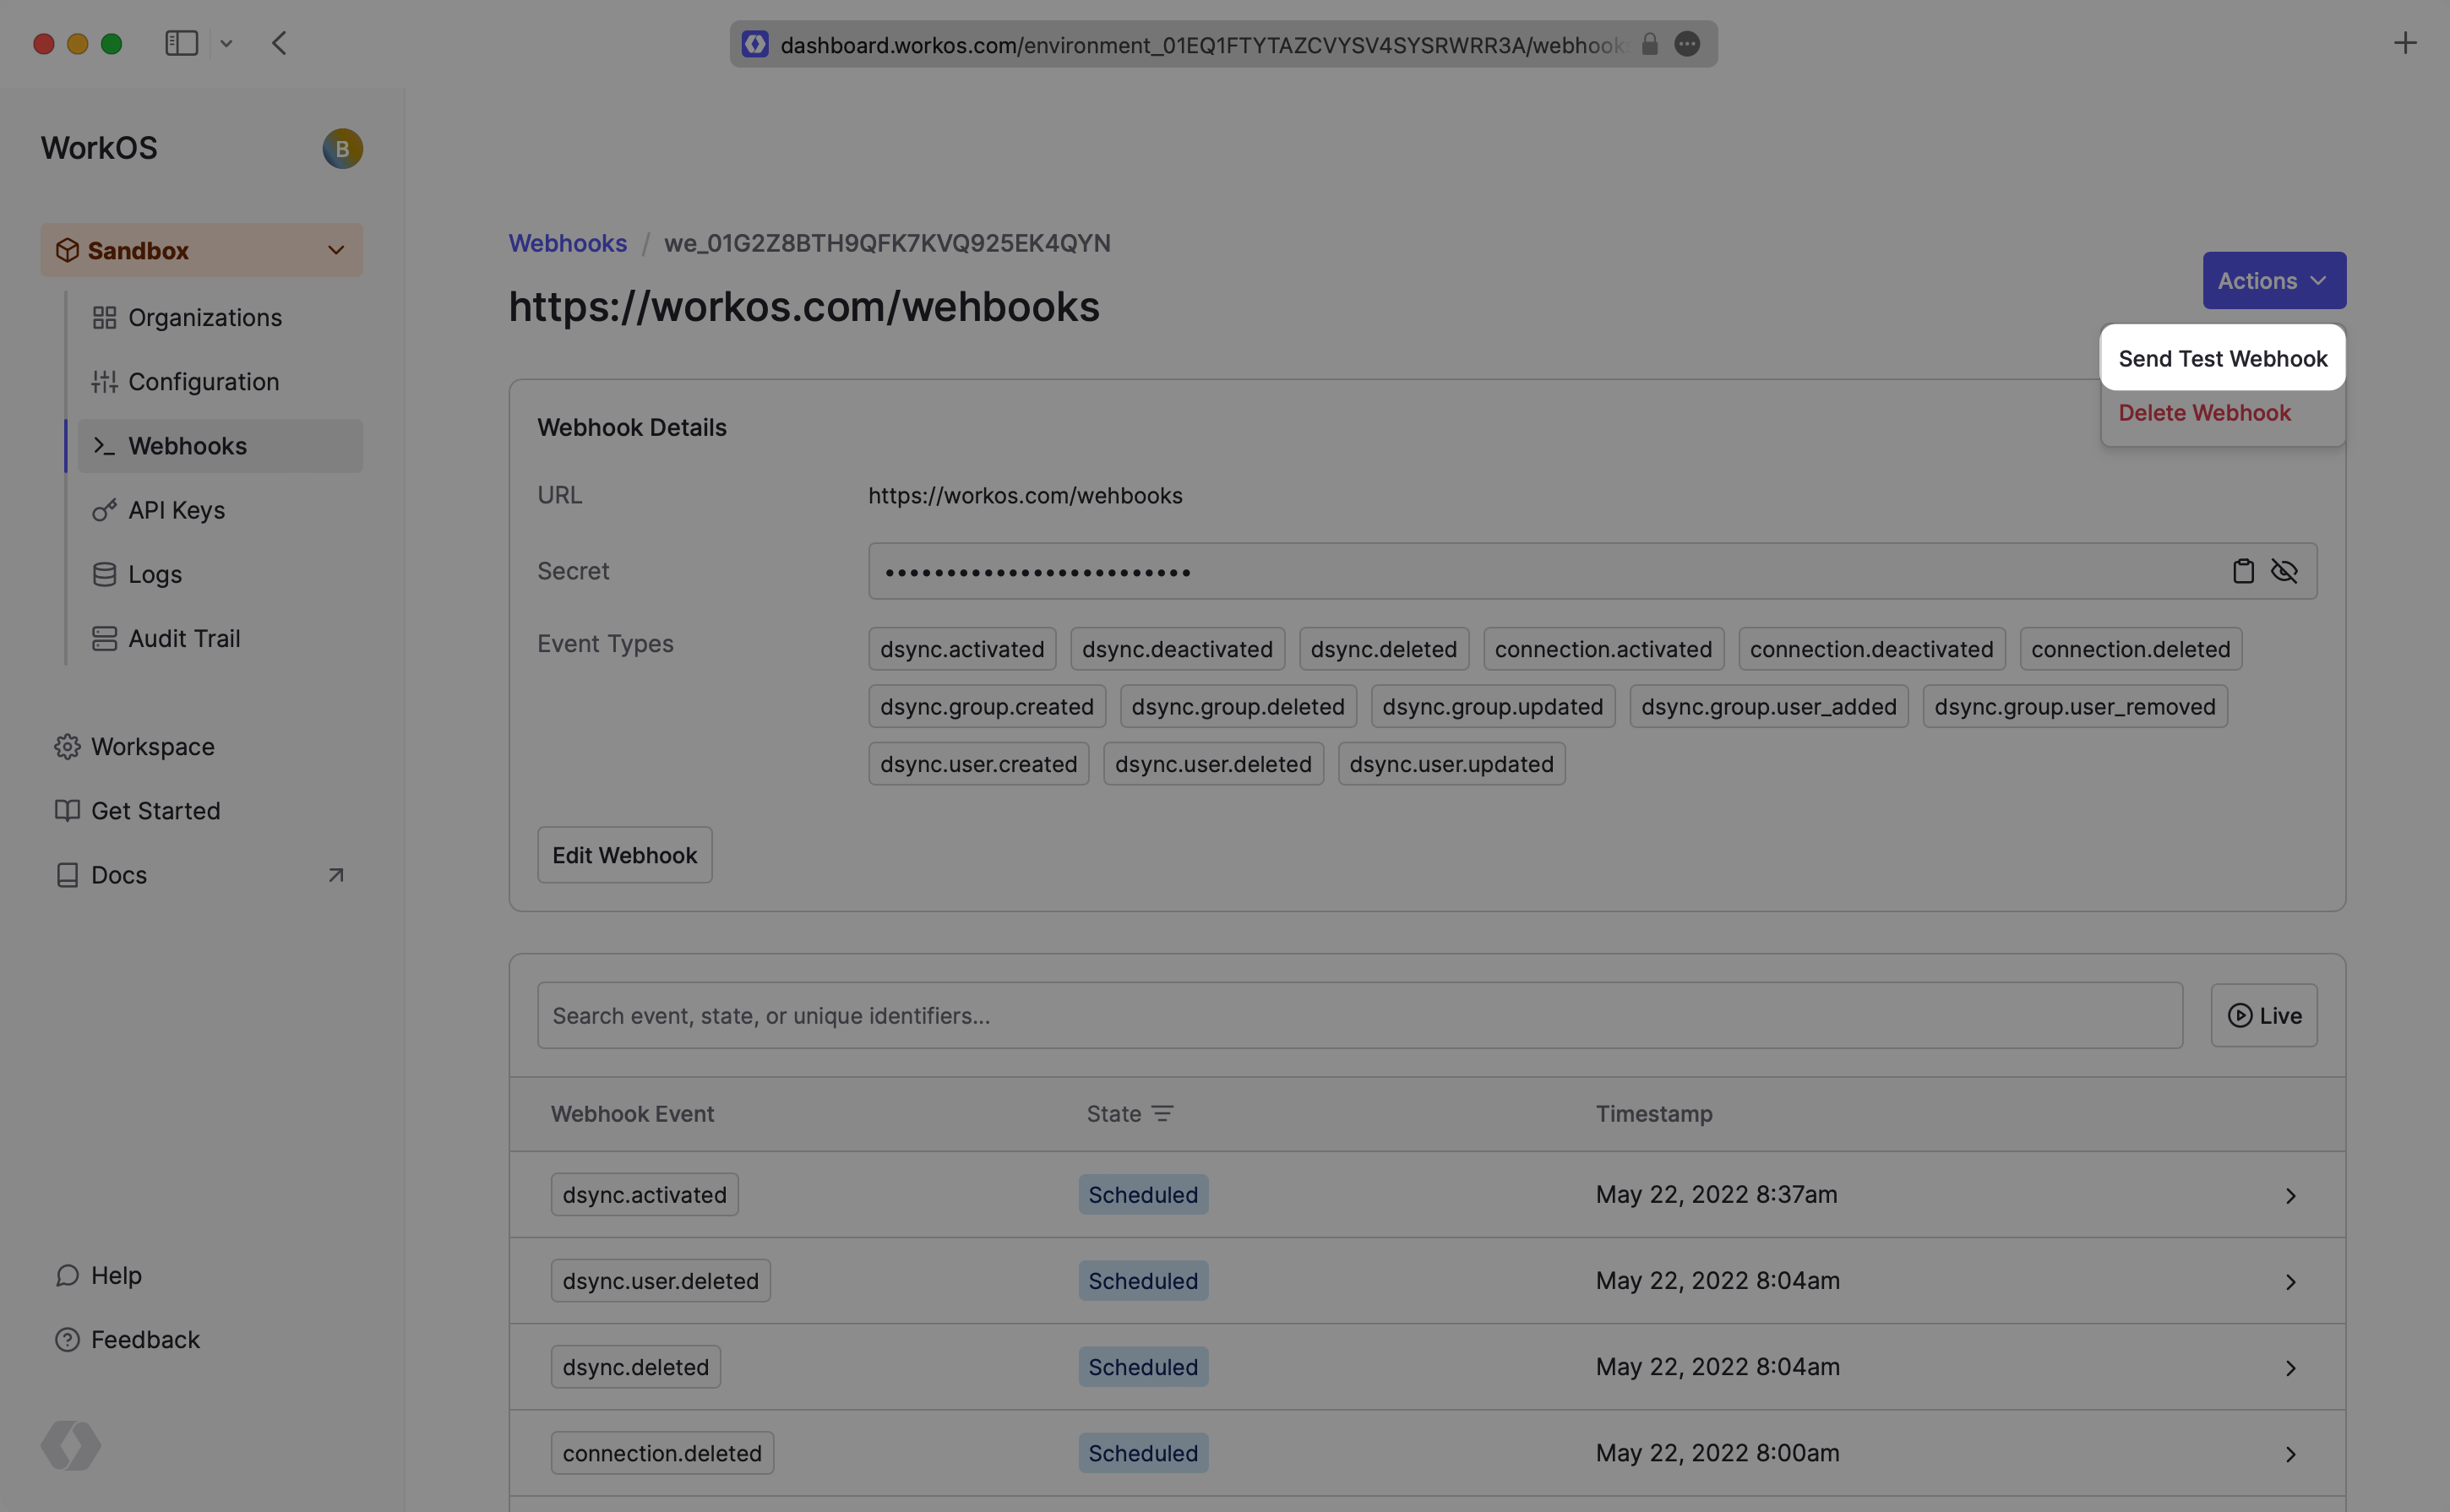 WorkOS Dashboard – Send Test Webhook